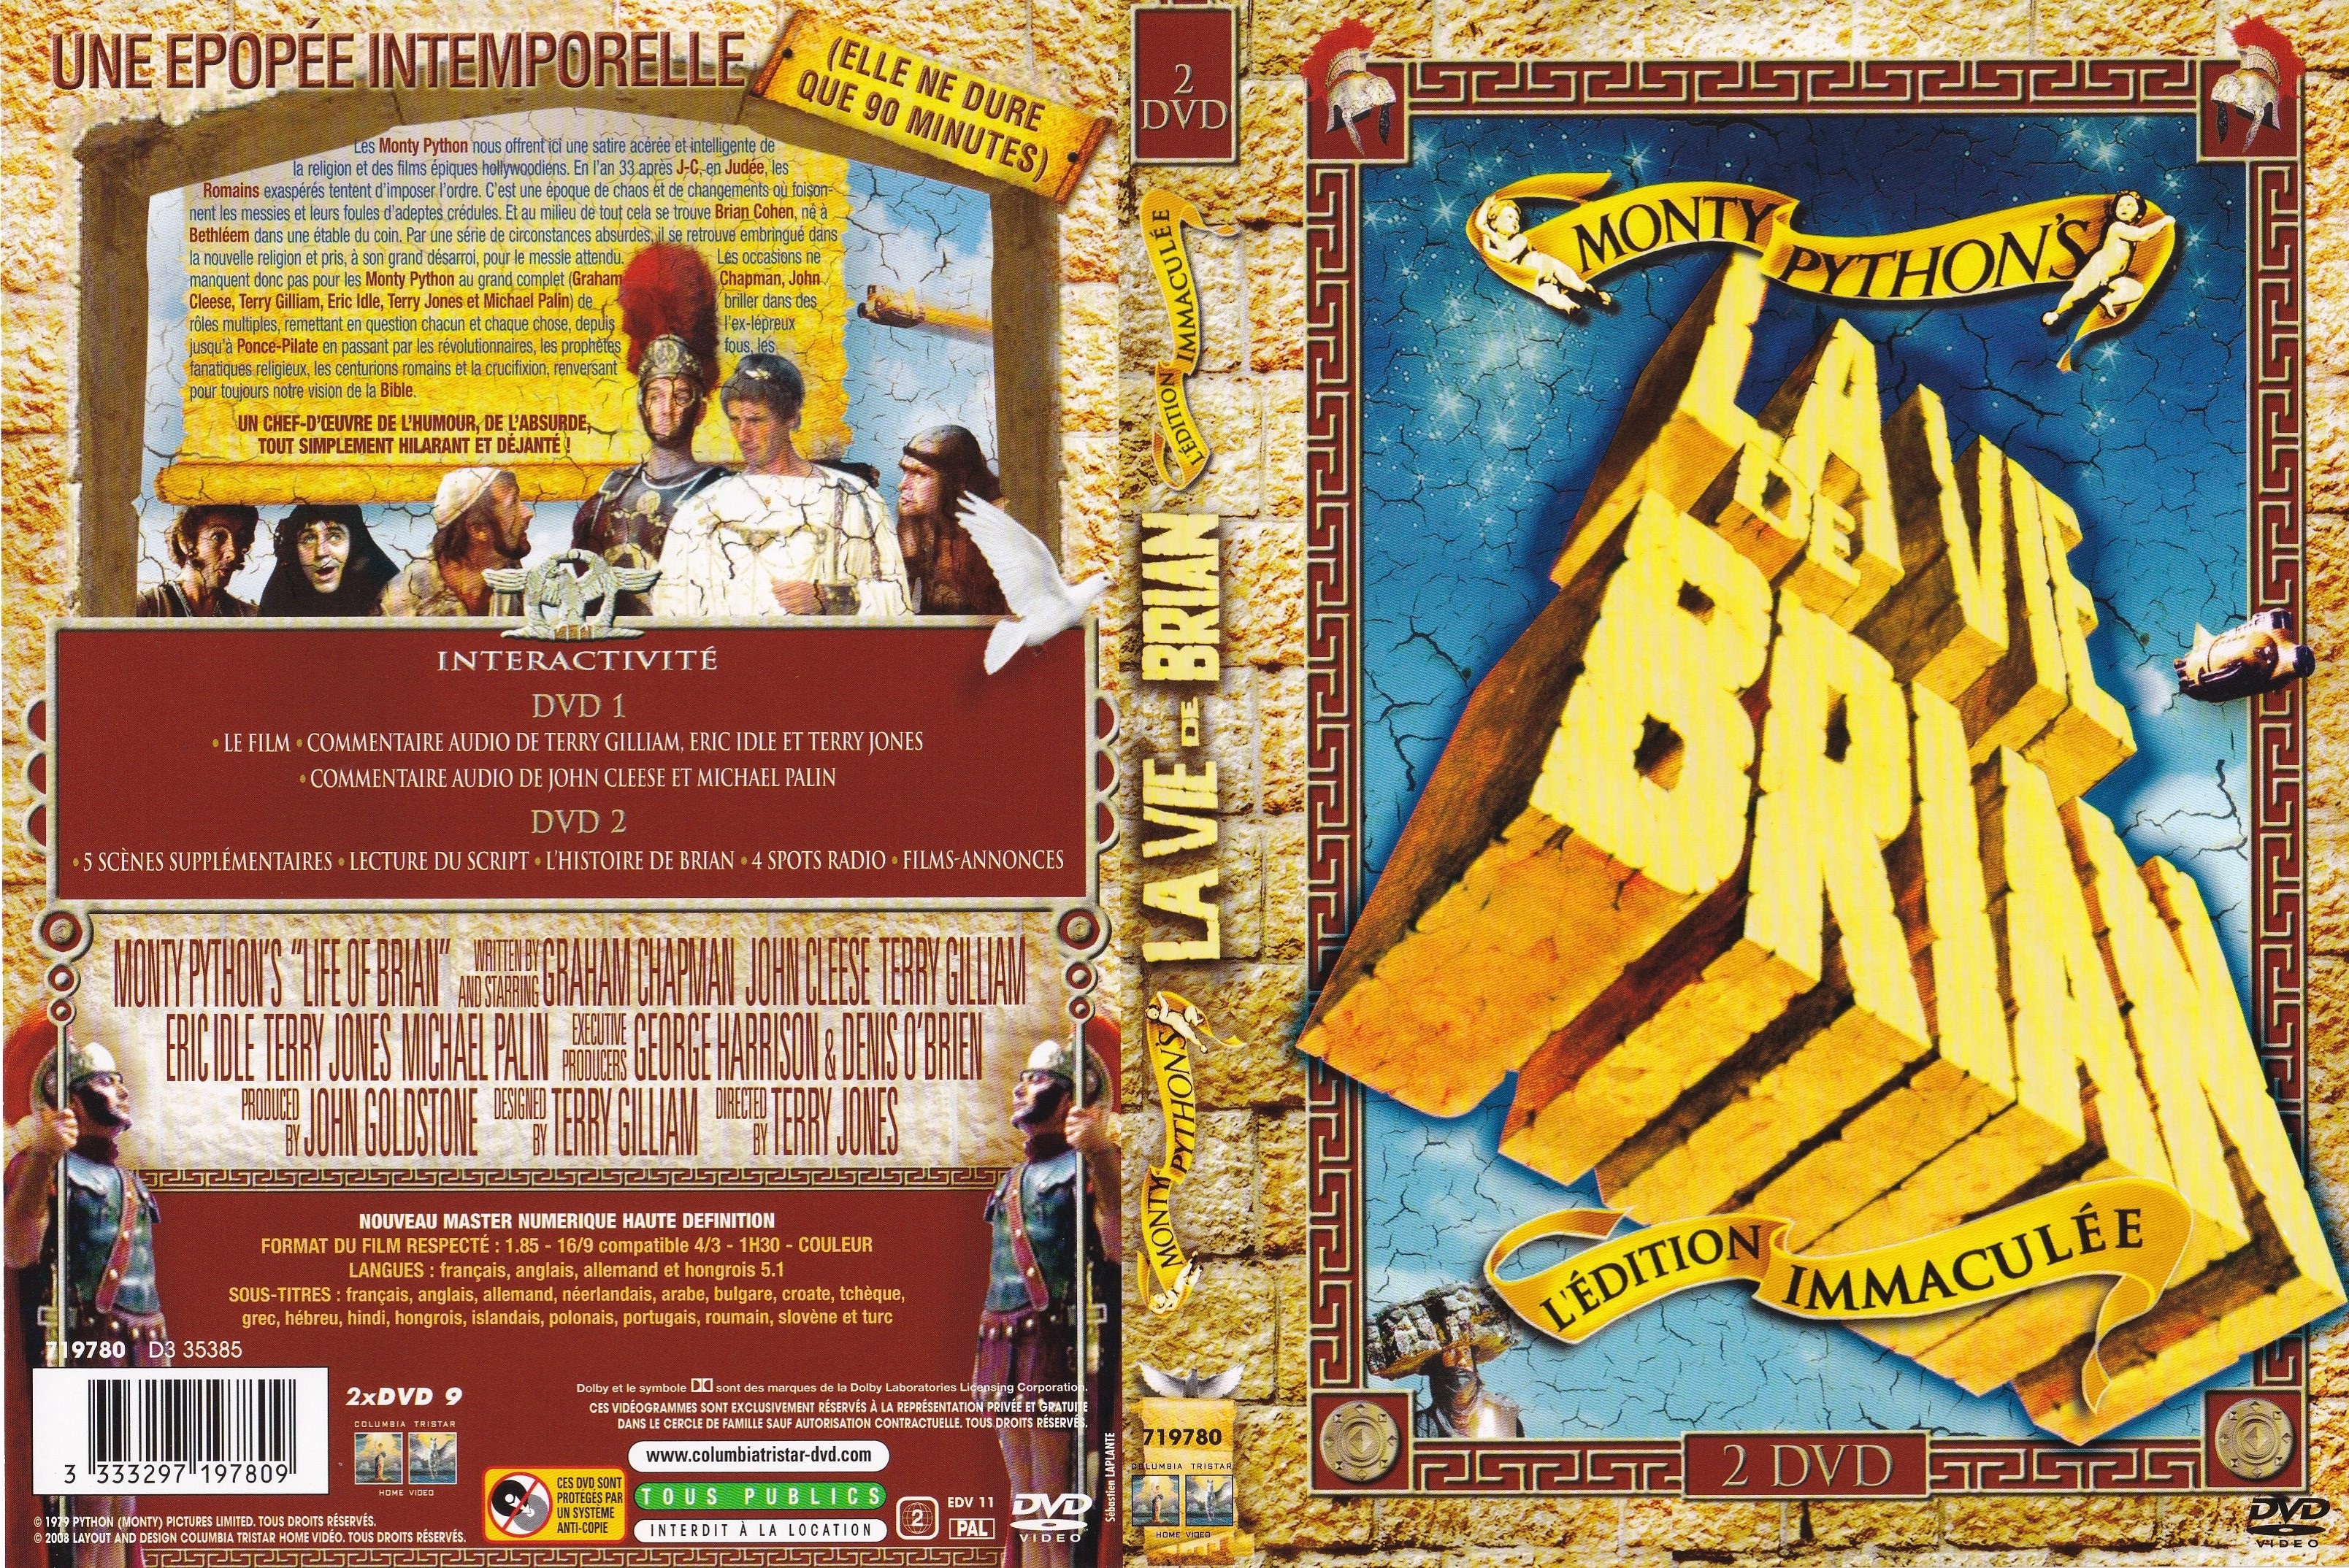 Jaquette DVD La Vie de Brian v3